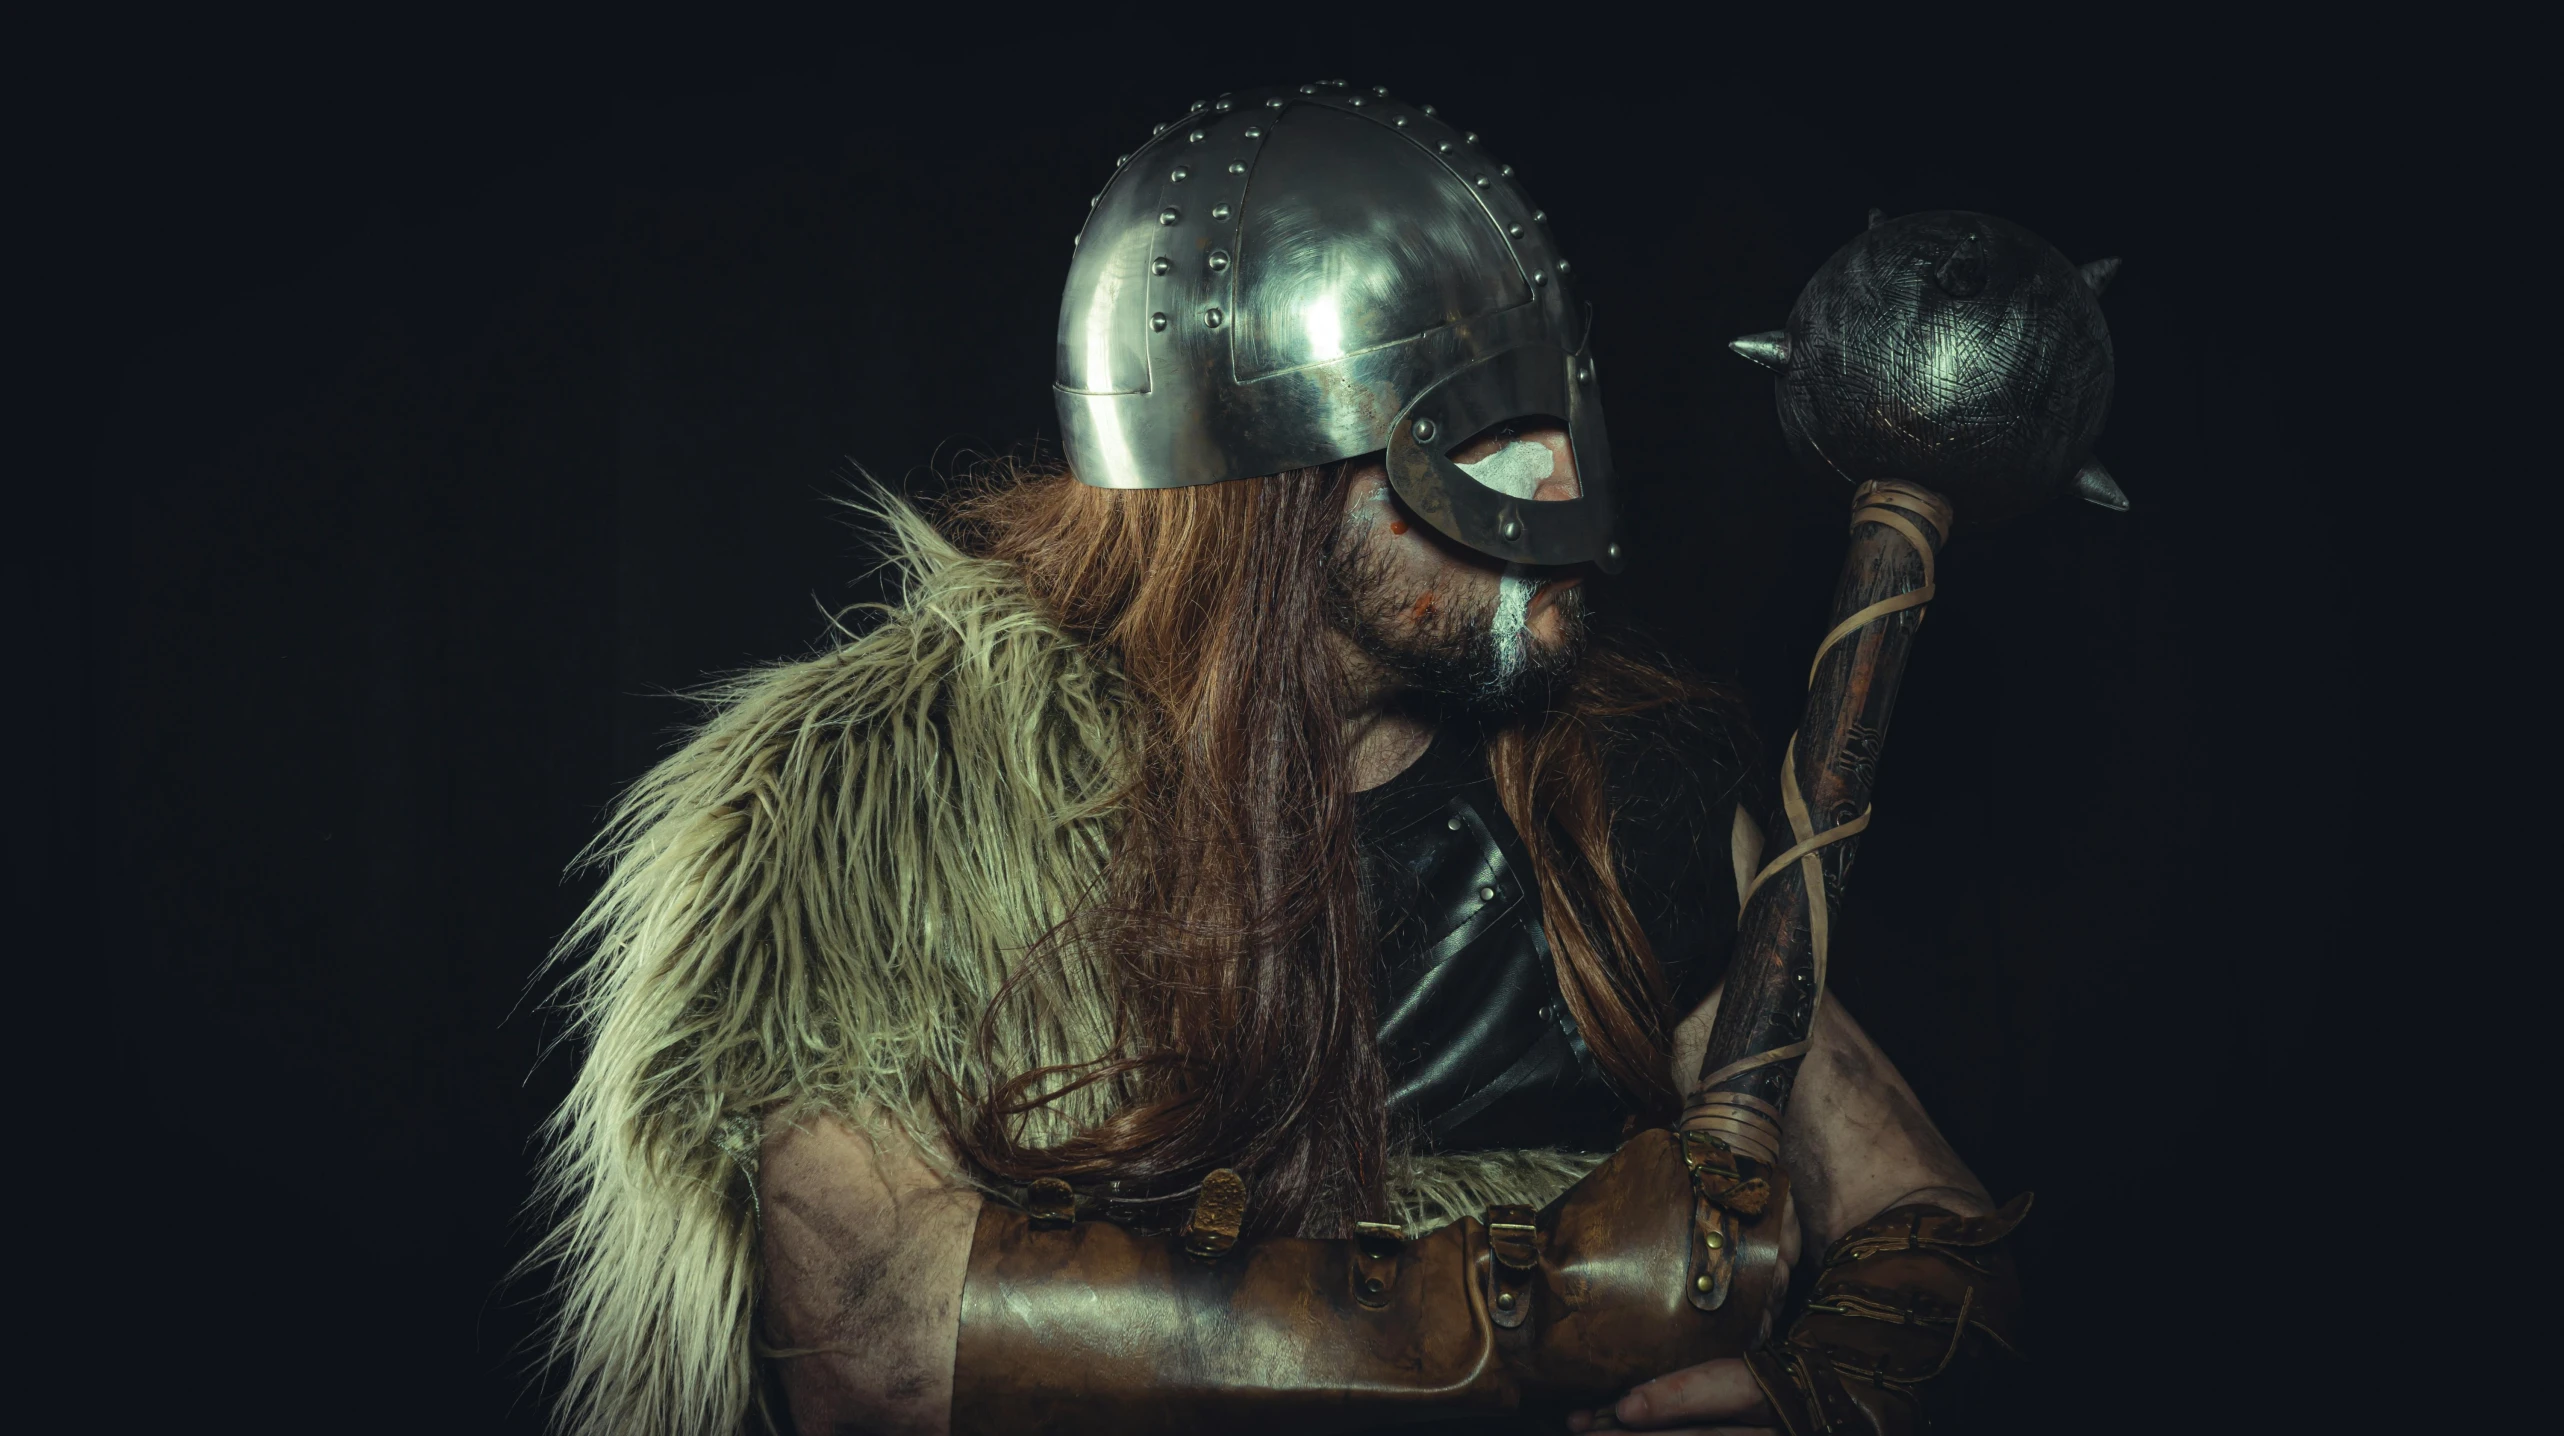 a man with long hair wearing a helmet and holding an axe, inspired by Þórarinn B. Þorláksson, pexels contest winner, fur armor, cosplay photo, vintage photo